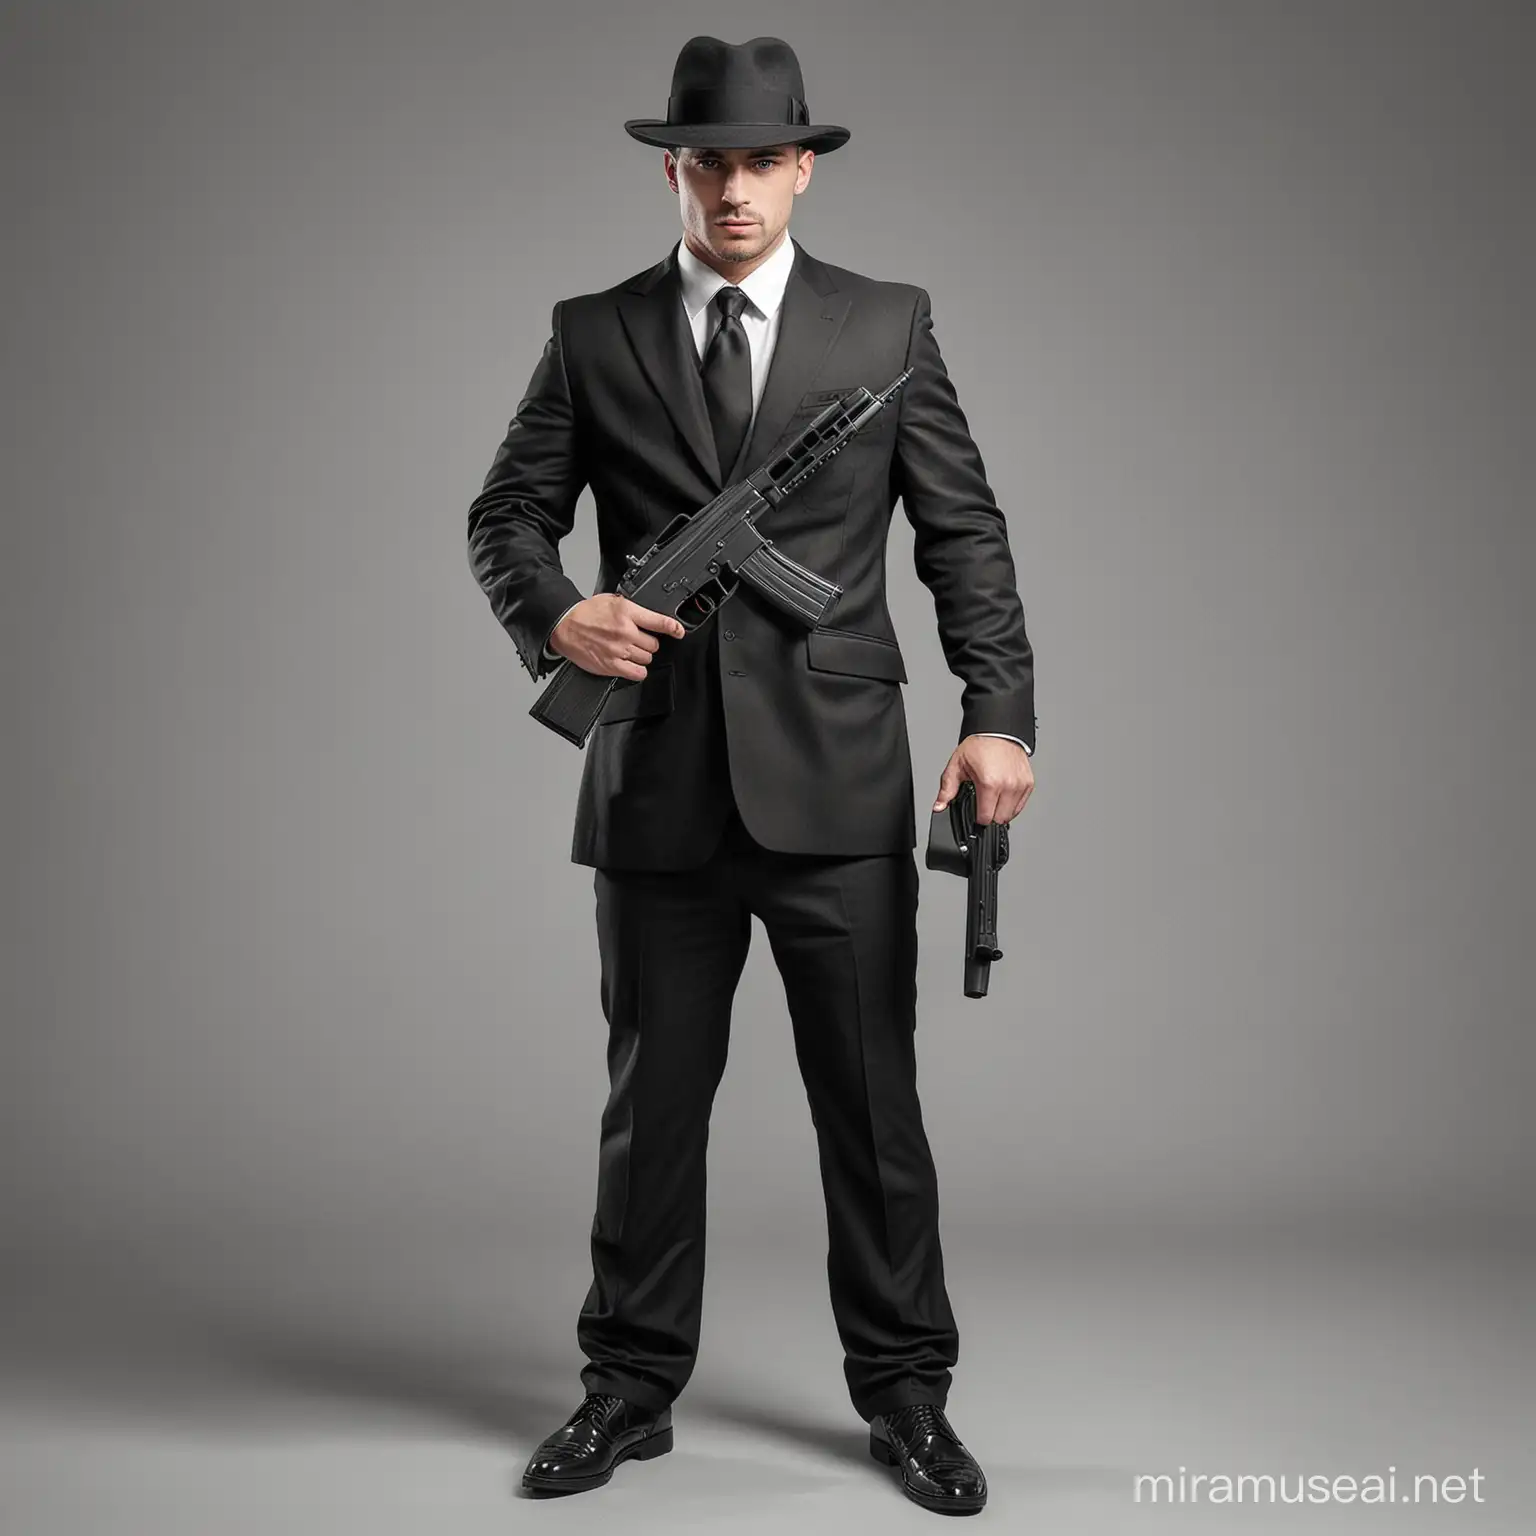 Suited Gangster Holding Gun in Full Body Portrait